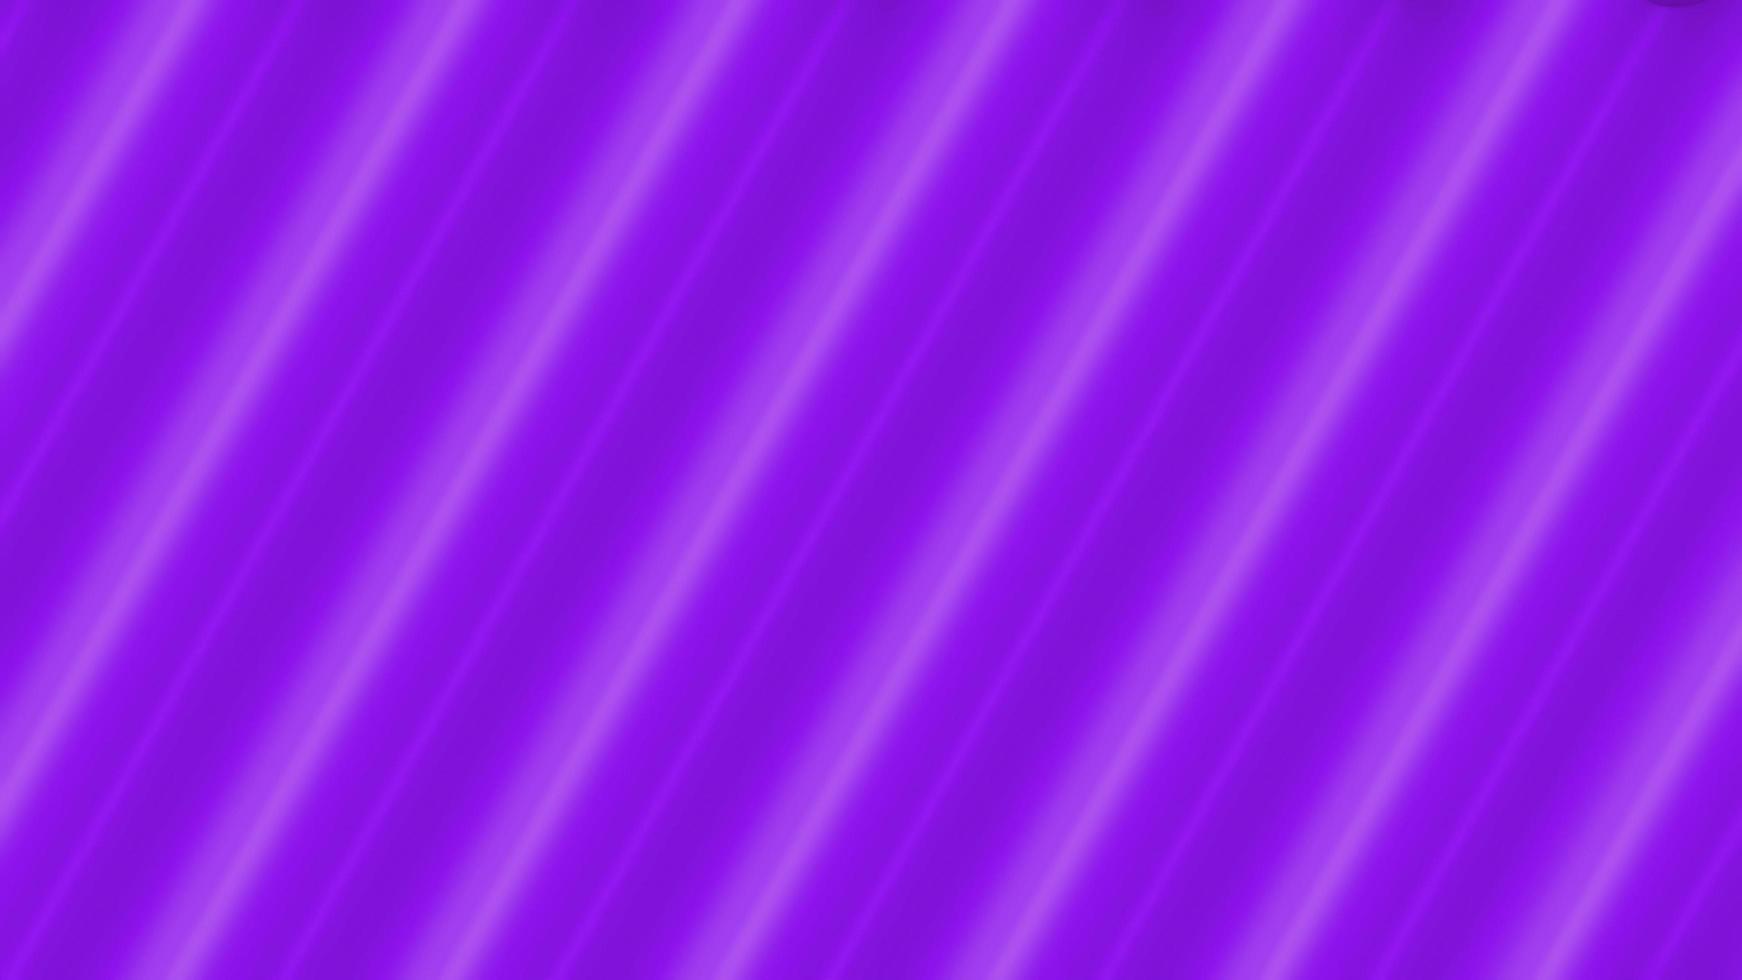 Lines pattern purple background stripes texture 3d illustration 4k rendering photo